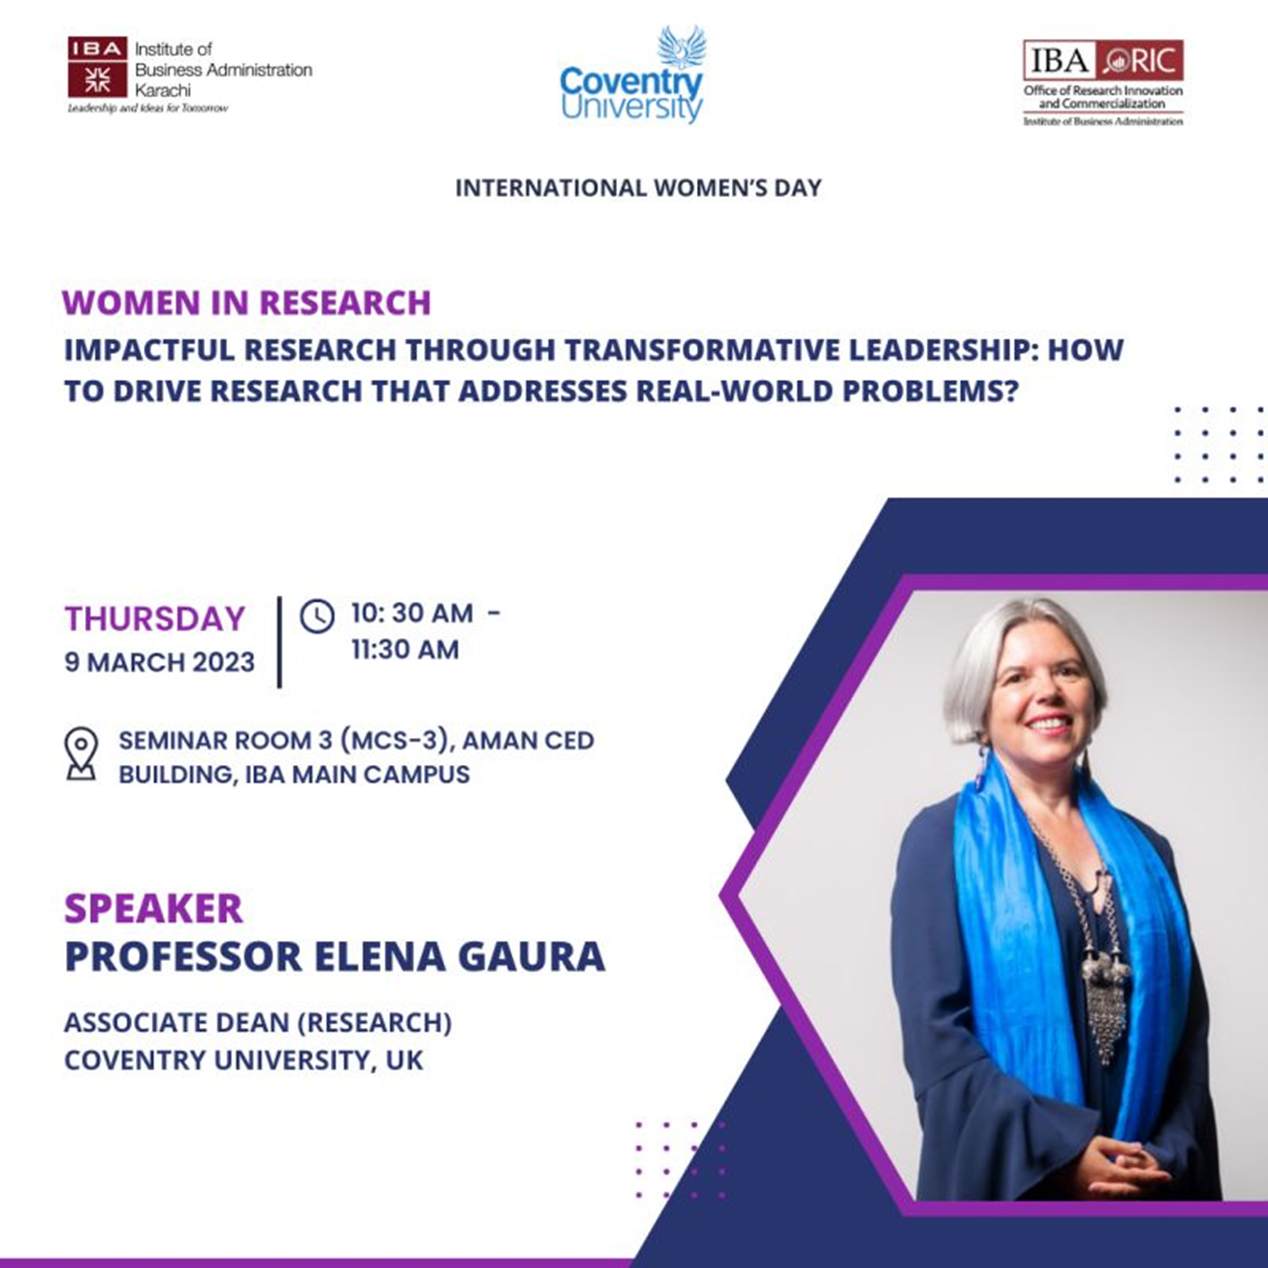 (Coventry University) Professor Elena Gaura for a talk on impactful research through transformative leadership